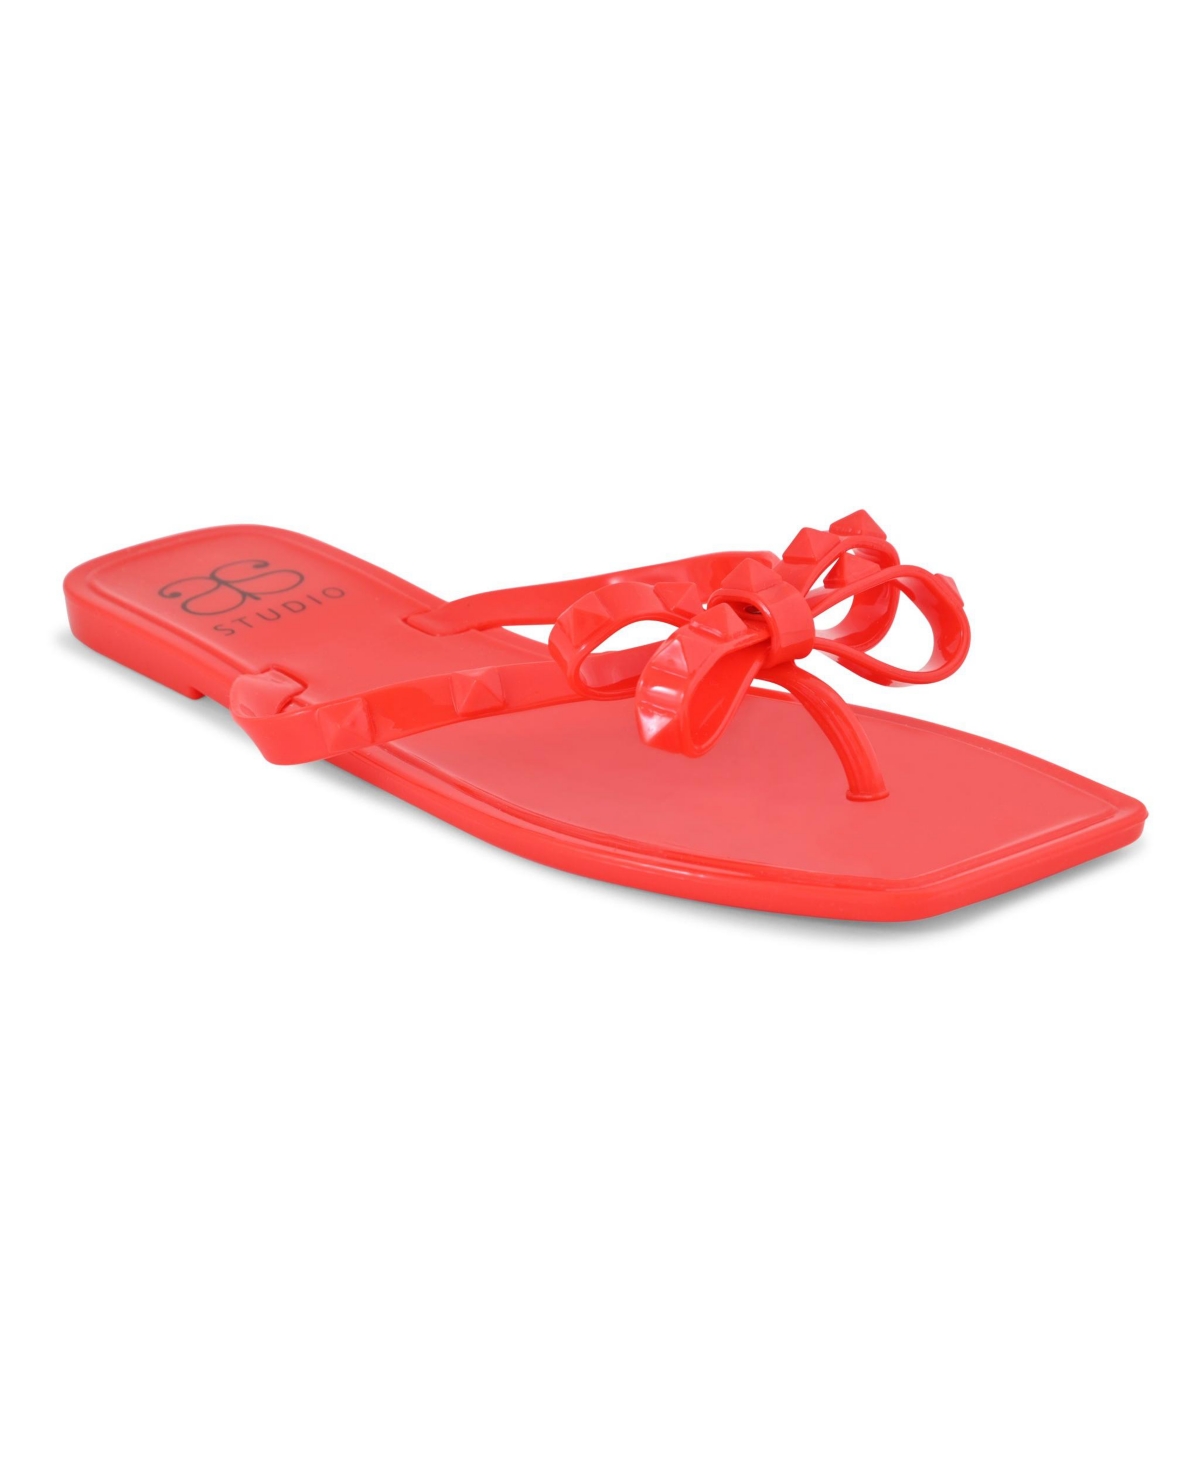 Women's Vallie Jelly Sandals - Red